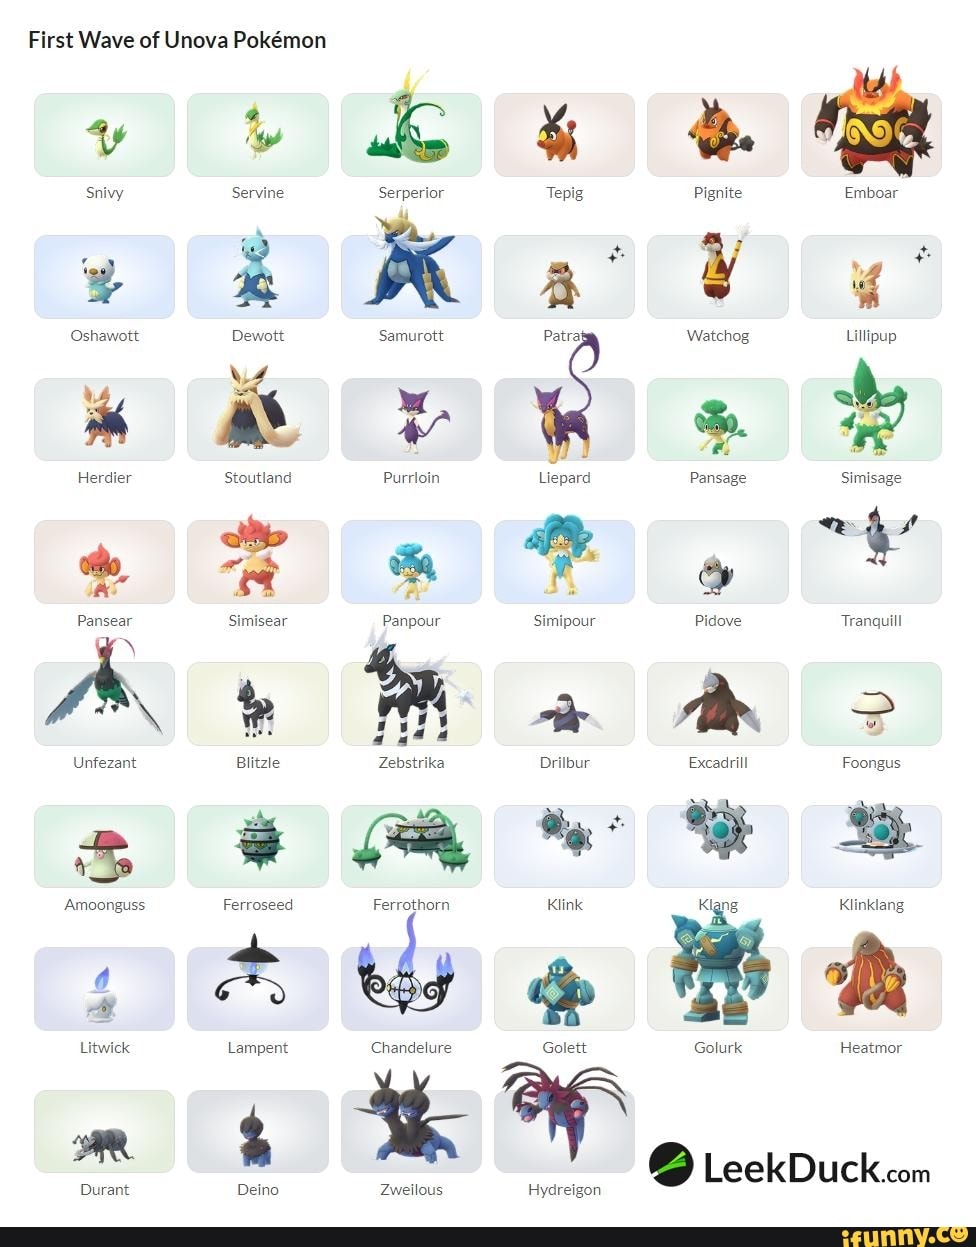 Leek Duck - Here's every Unova Pokémon that was added